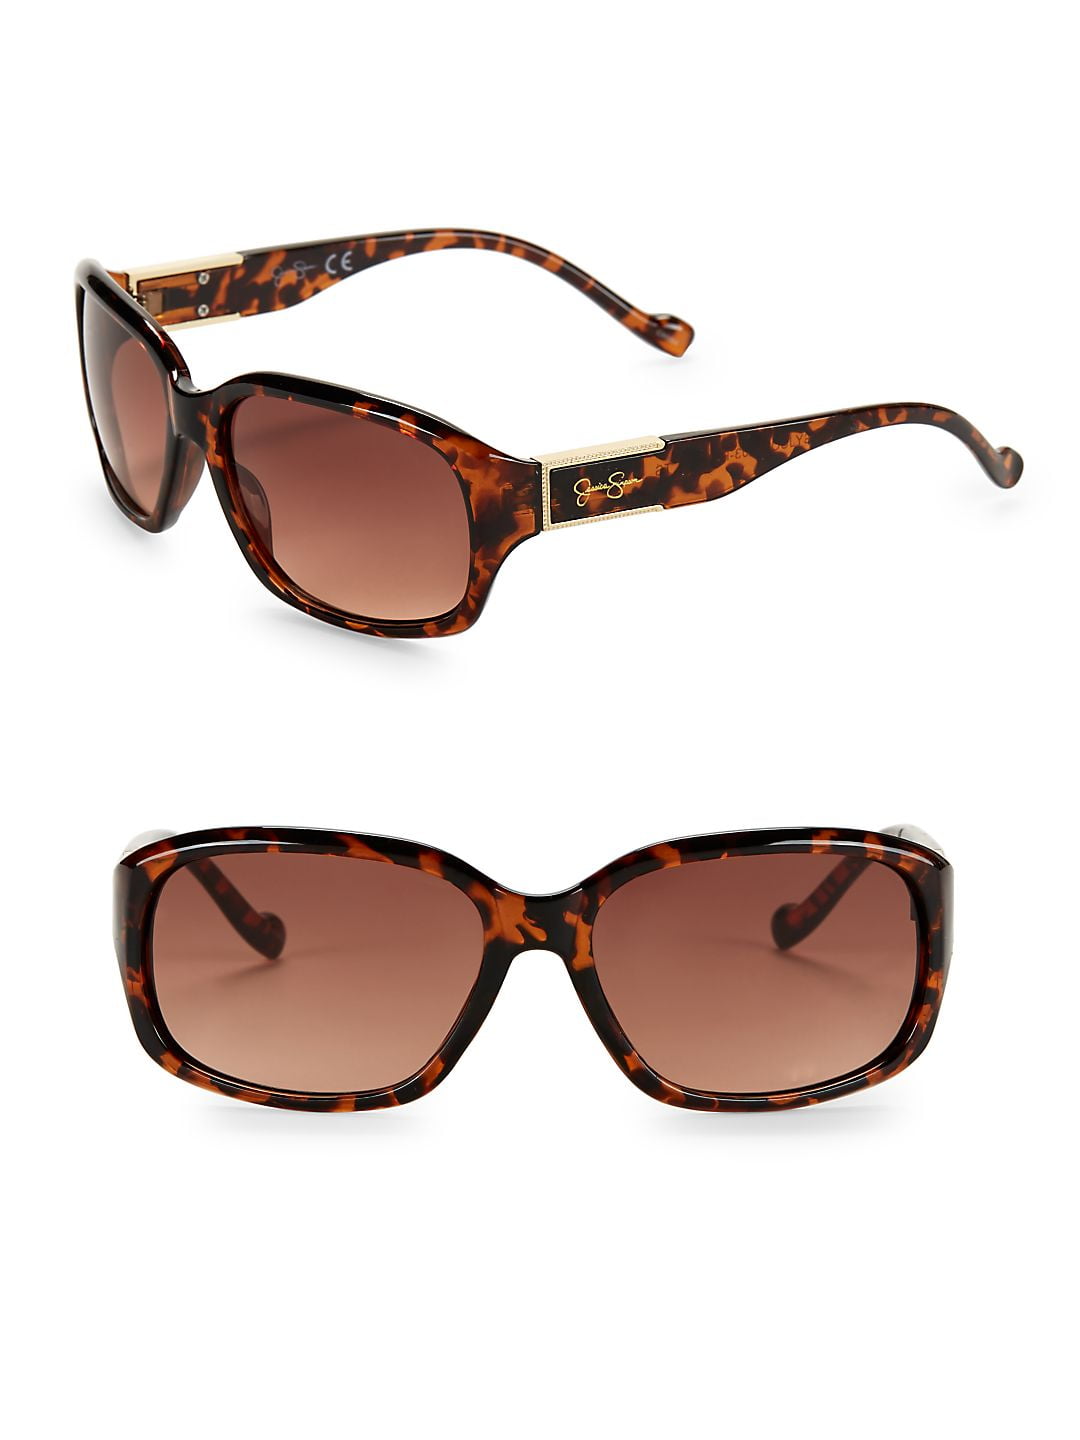 Jessica Simpson Women's Rectangular Sunglasses with 100% UV Protection ...